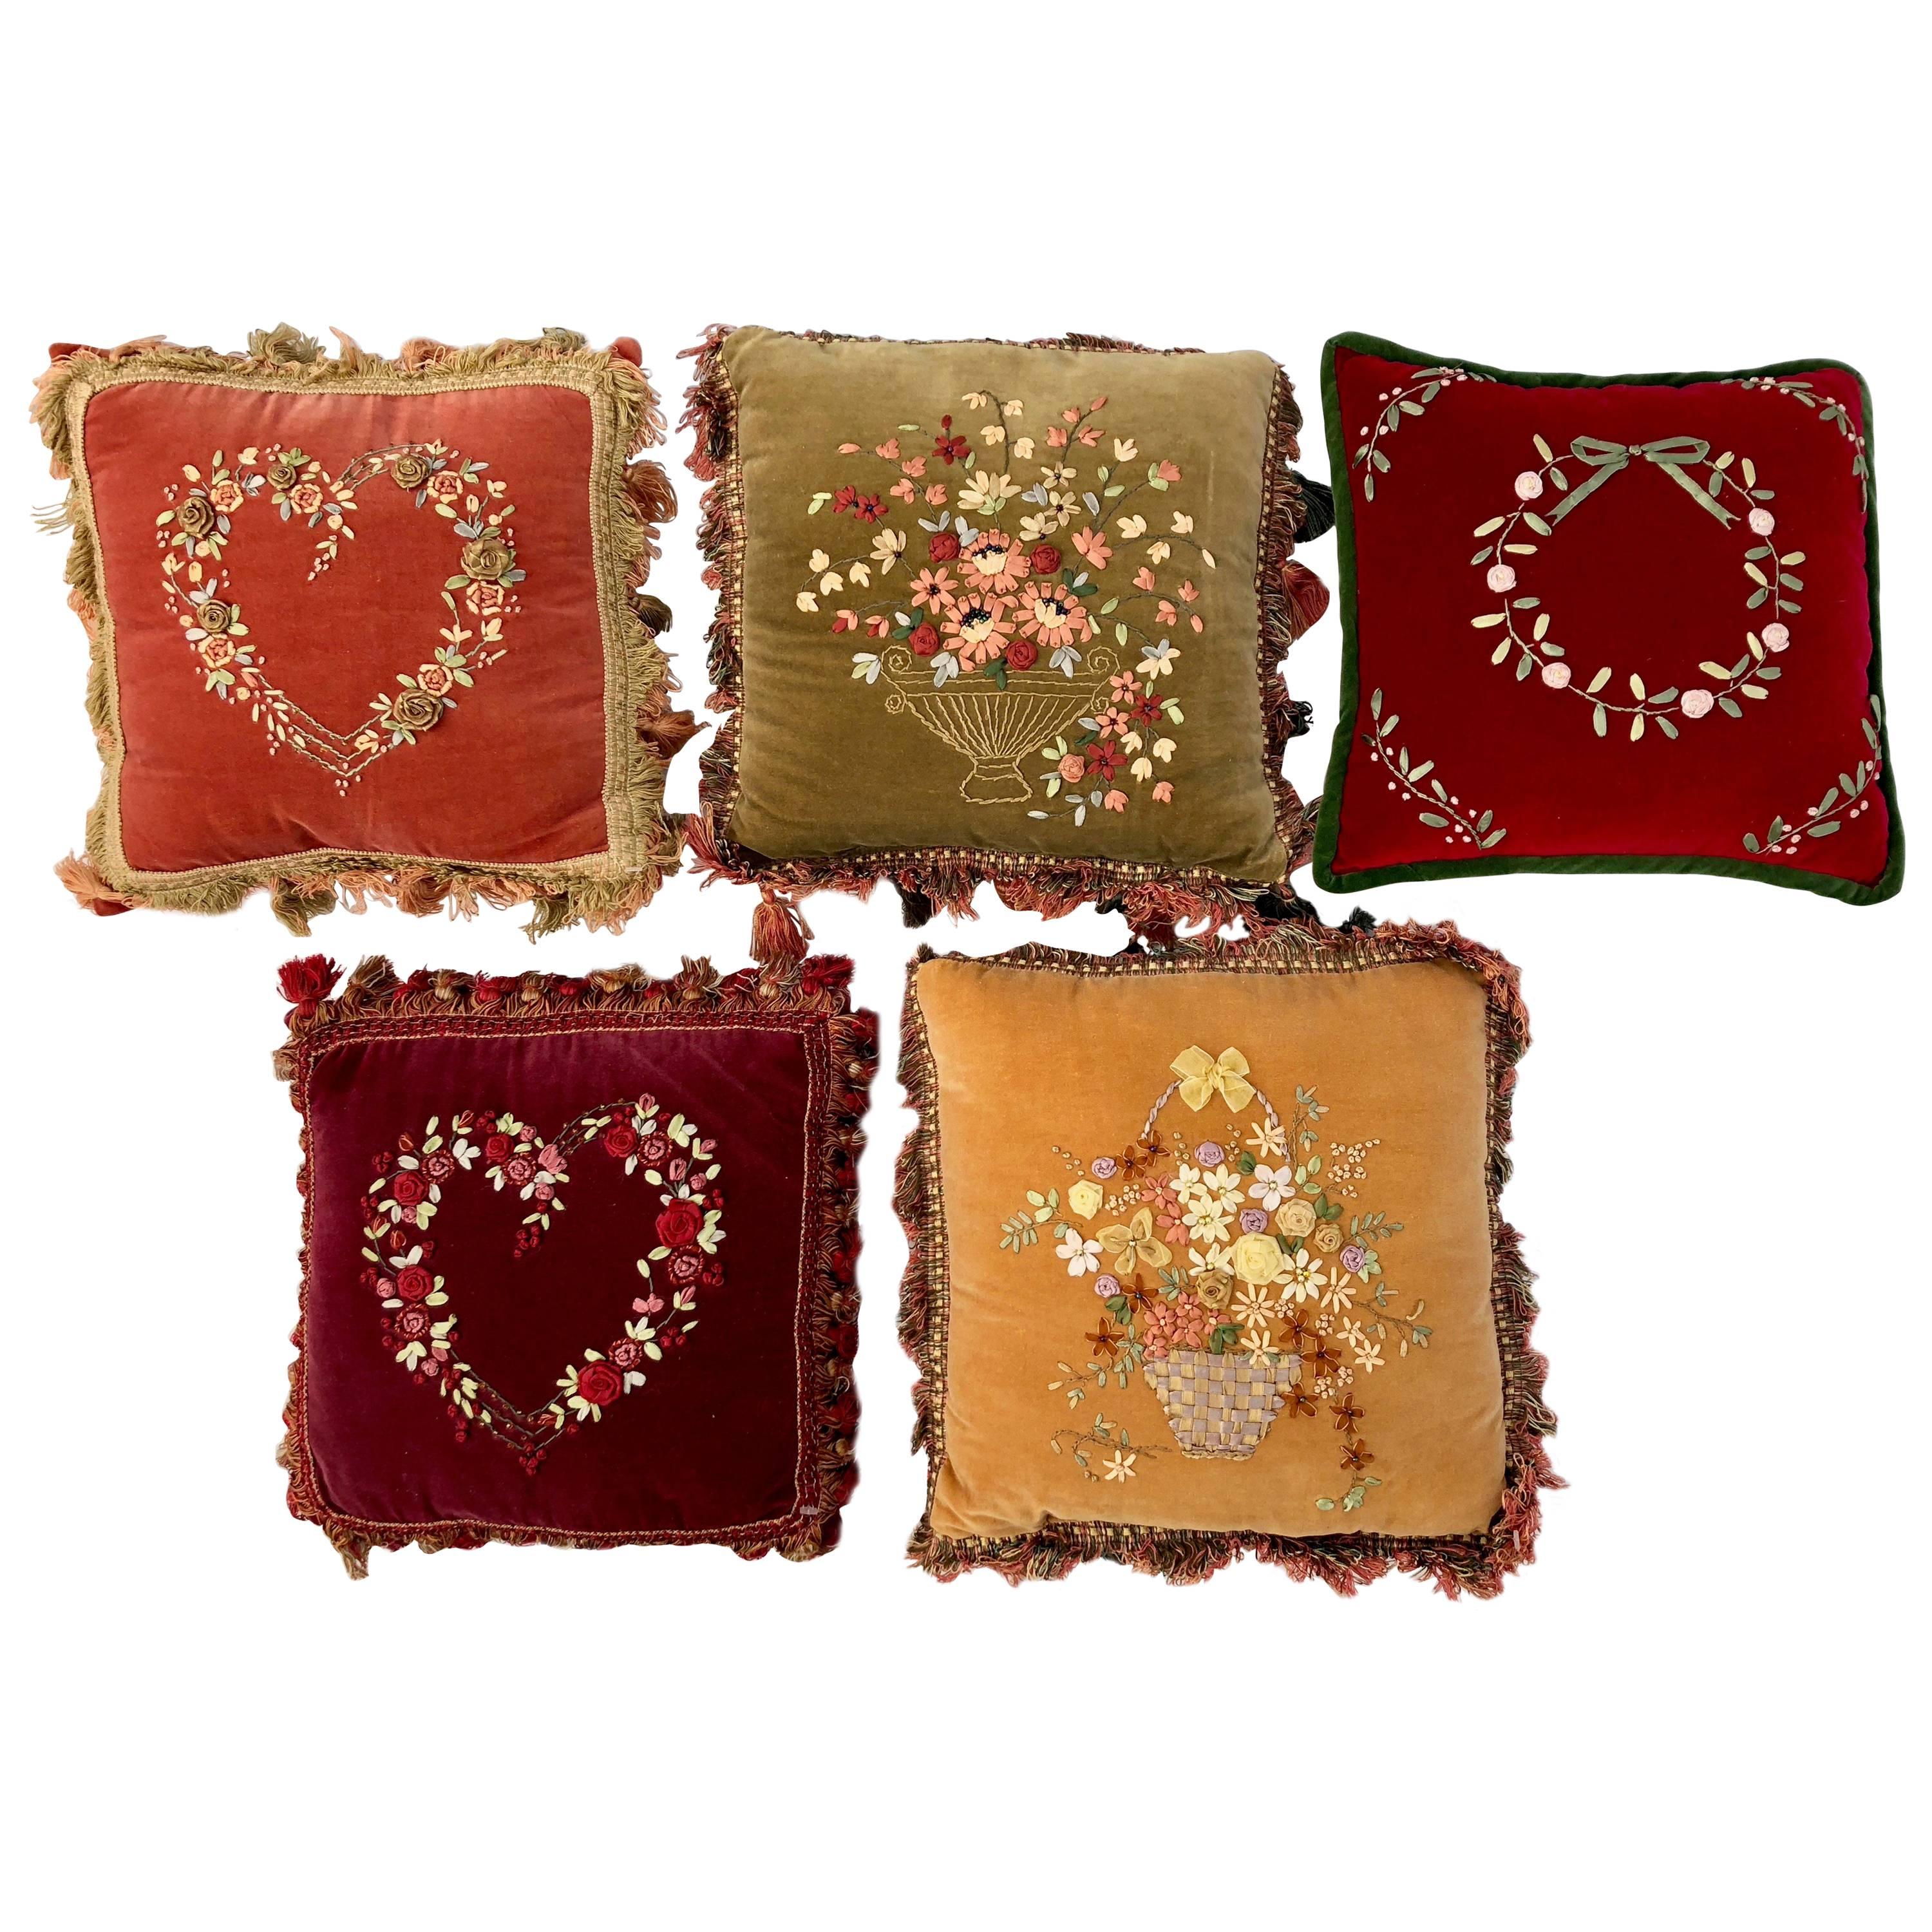 Vintage Velvet Ribbon Art Pillows, Floral, Heart and Wreath Designs, Set of Five For Sale